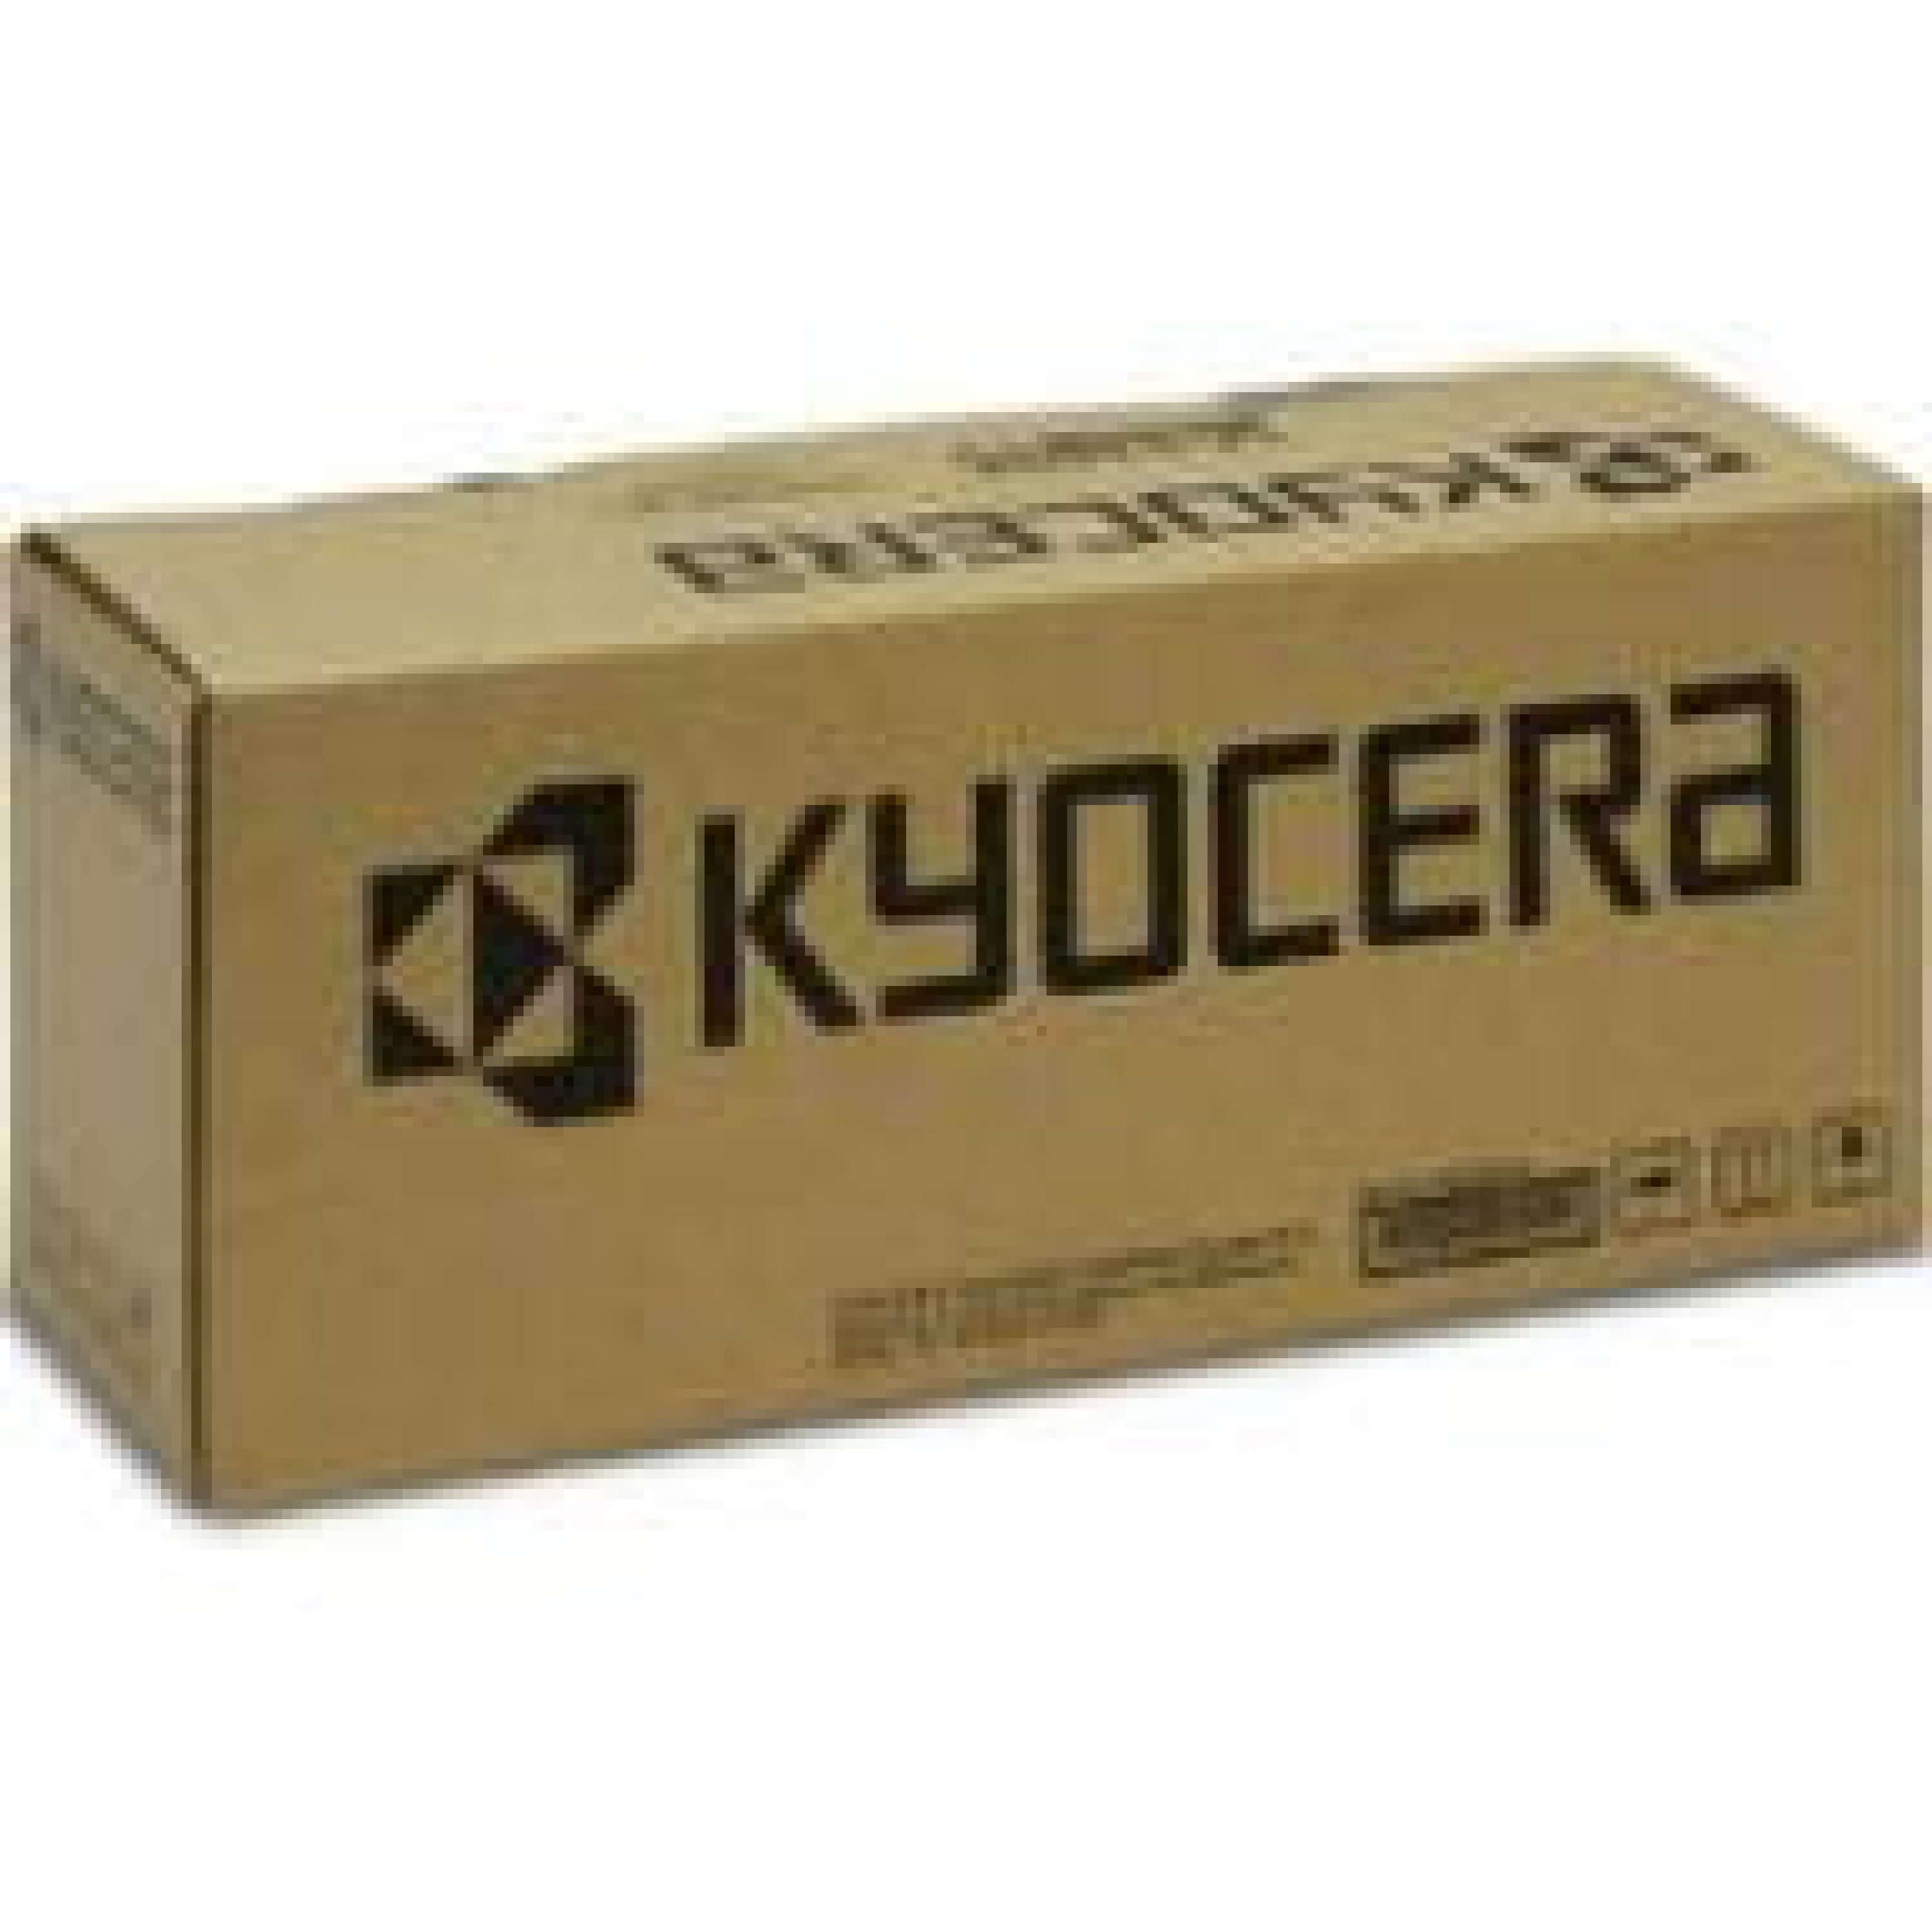 Original Toner Kyocera MA 2100 cwfx (1T0C0ACNL1 / TK-5430C)